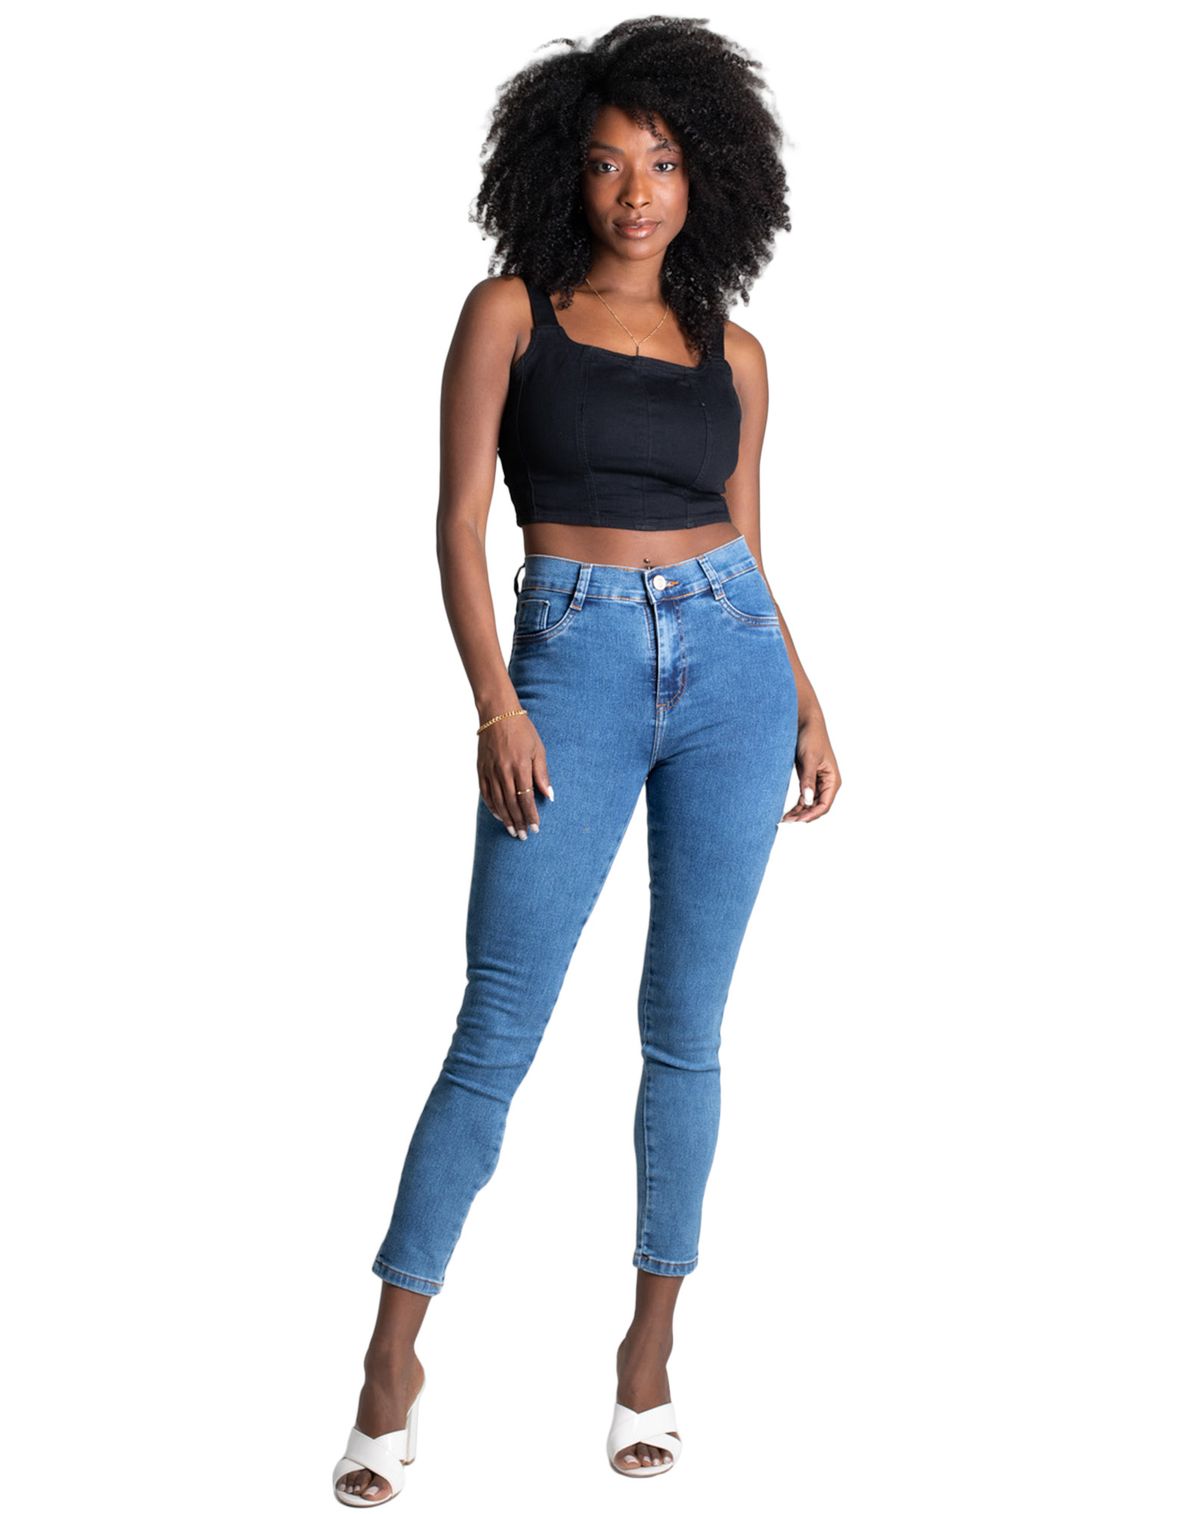 690481002-calca-jeans-feminina-skinny-cintura-alta-jeans-medio-38-098